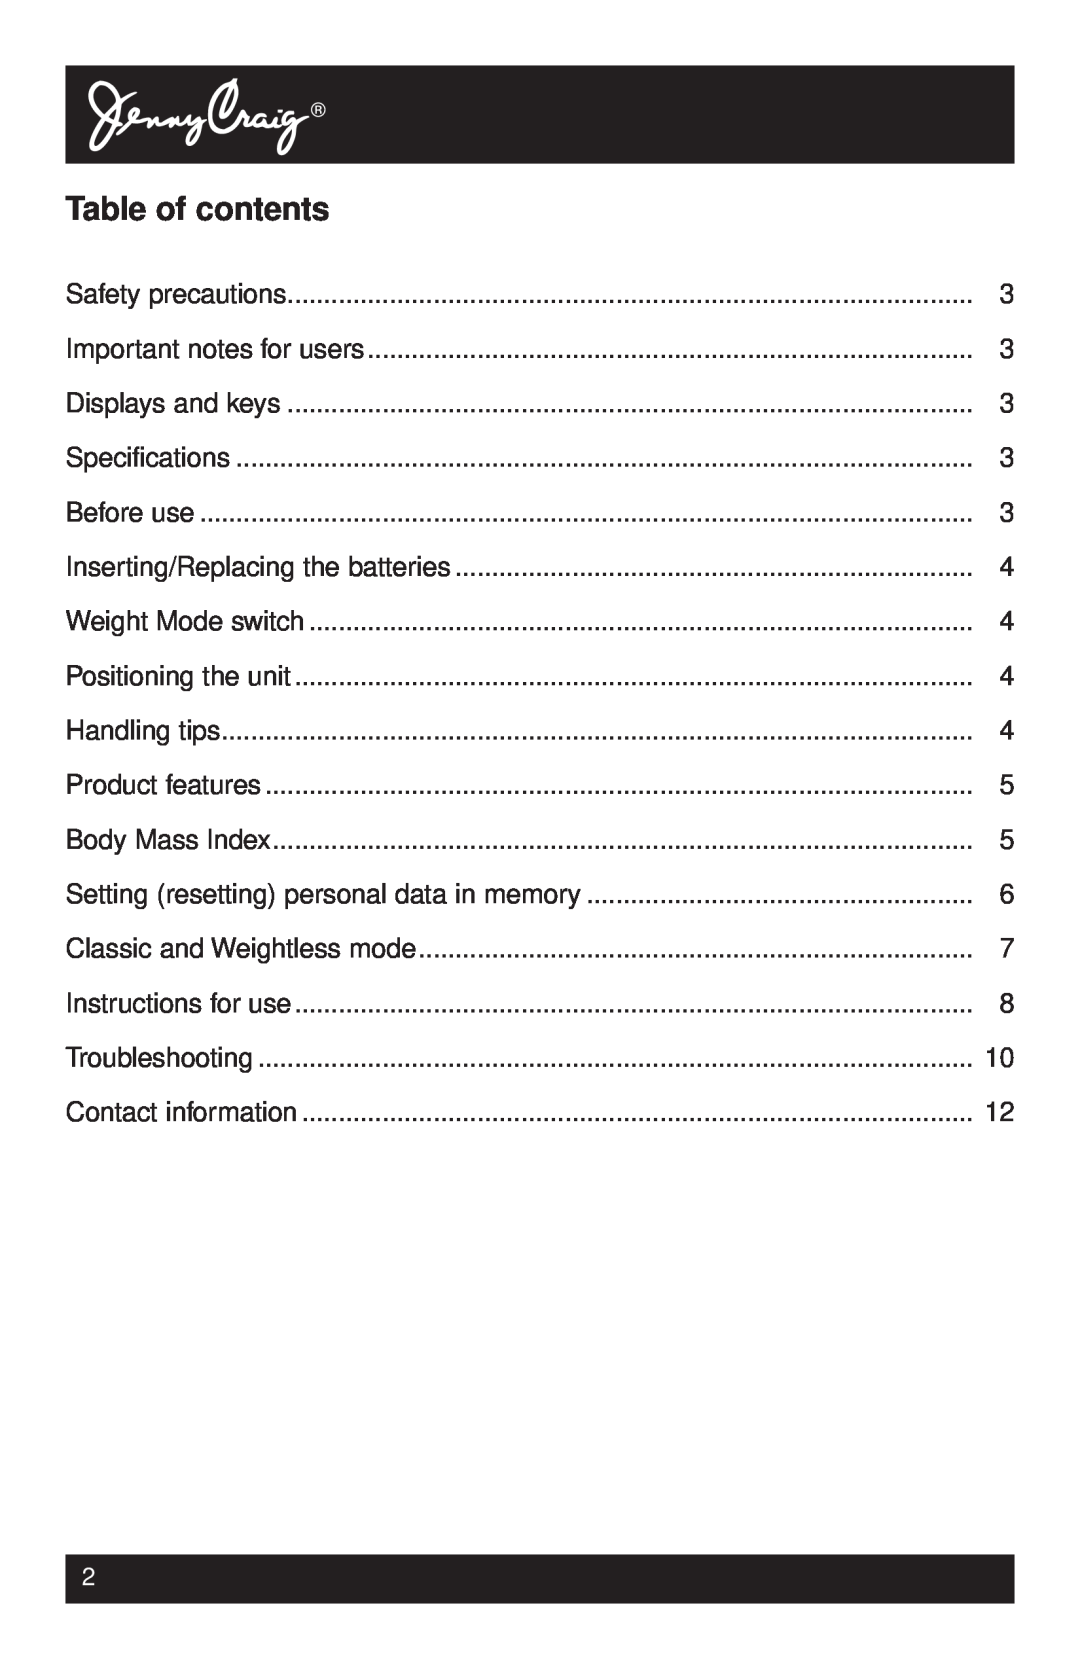 Tanita HD-338 instruction manual Table of contents 